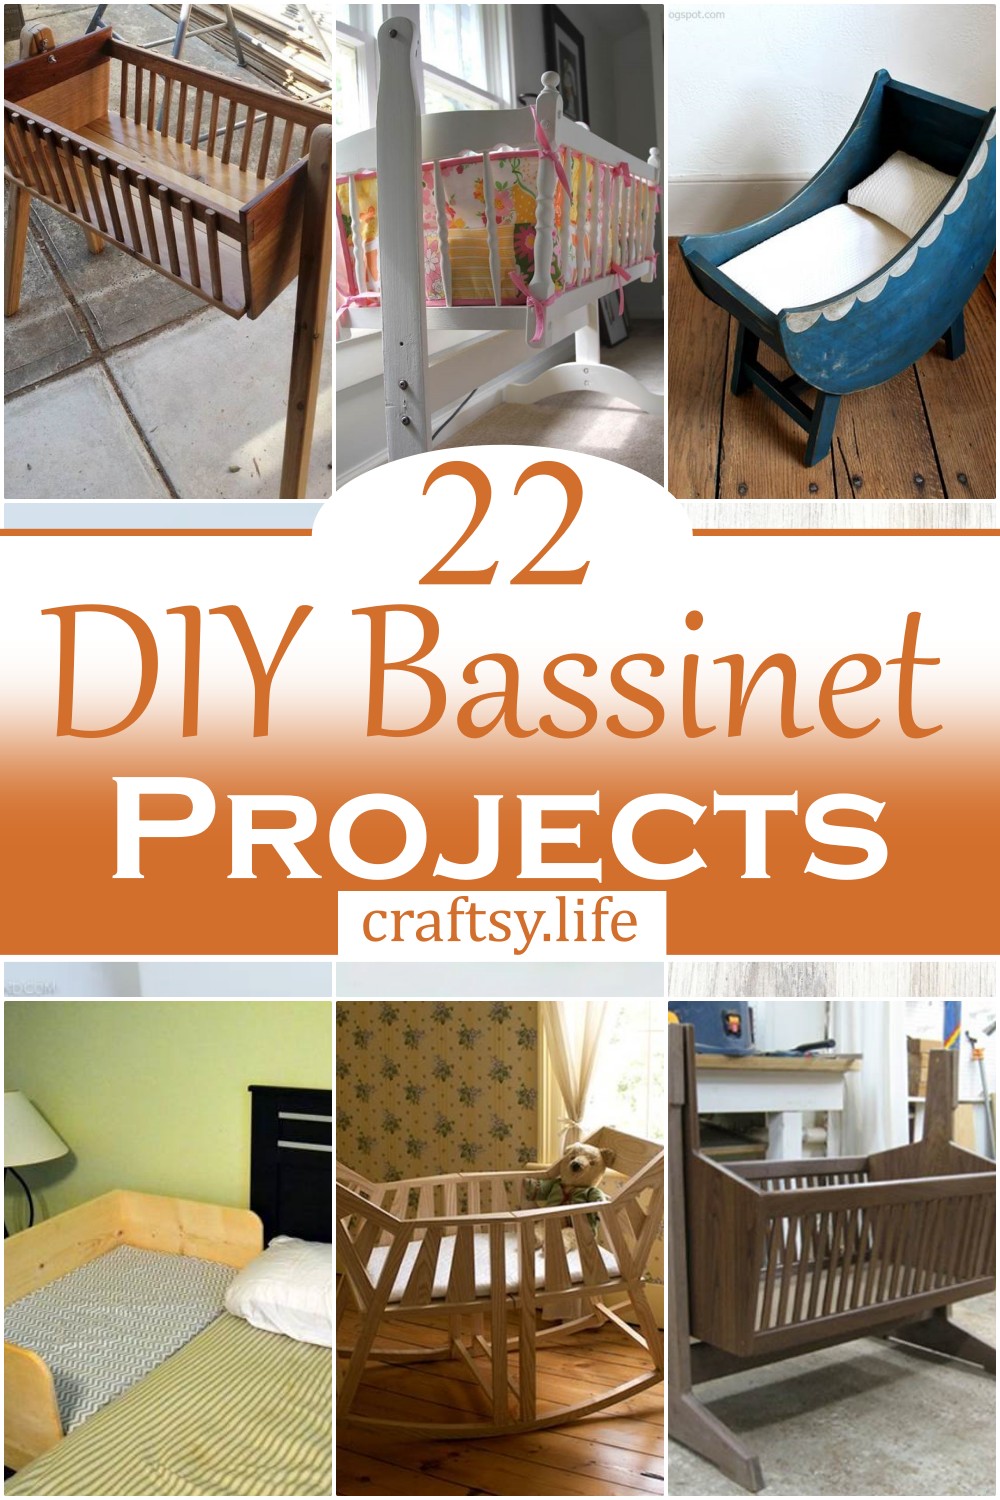 DIY Bassinet Projects